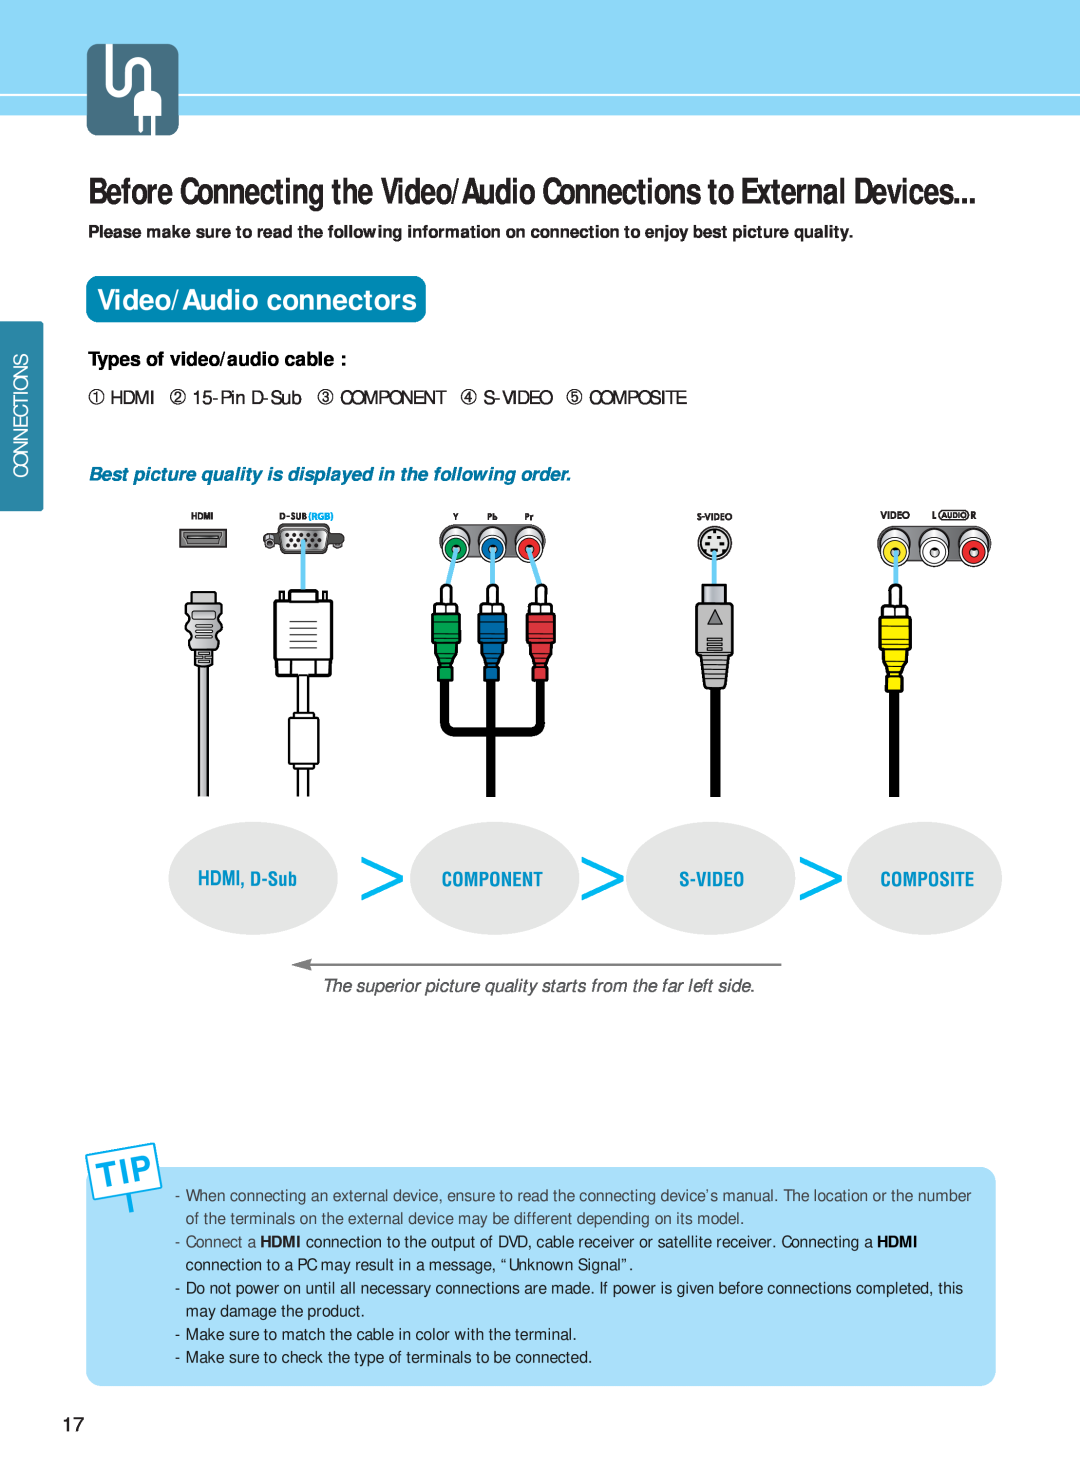 Hyundai E321D, E261D, E371D manual Video/Audio connectors, Types of video/audio cable, Connections 